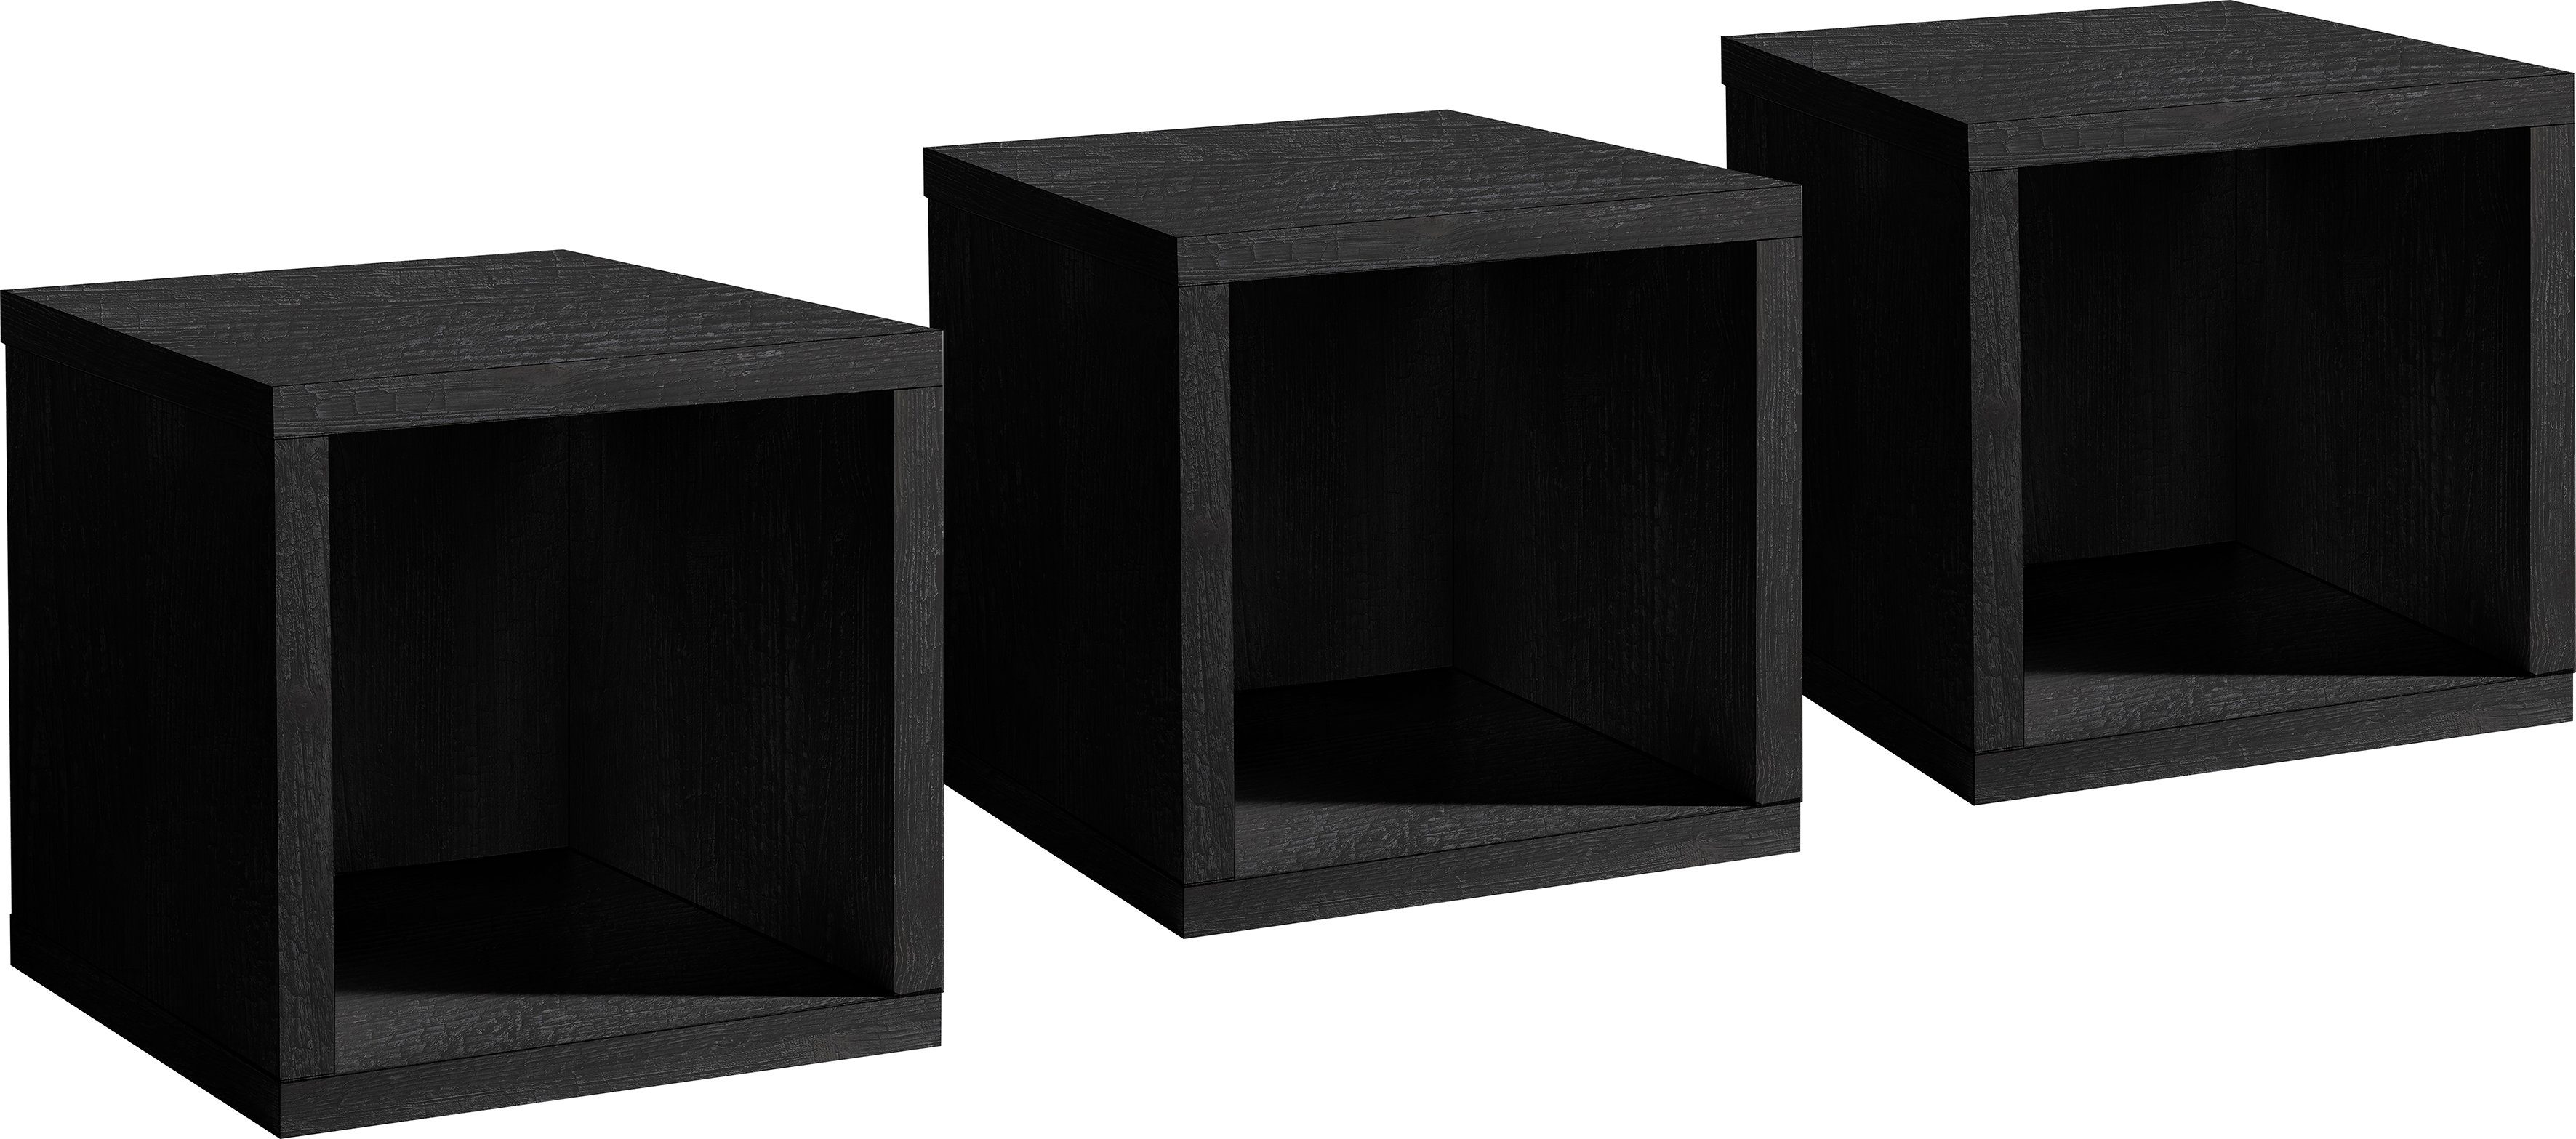 Qualität ist perfekt Mäusbacher Hängeregal Bonnie, wood | wood black 3er-Set flamed flamed black